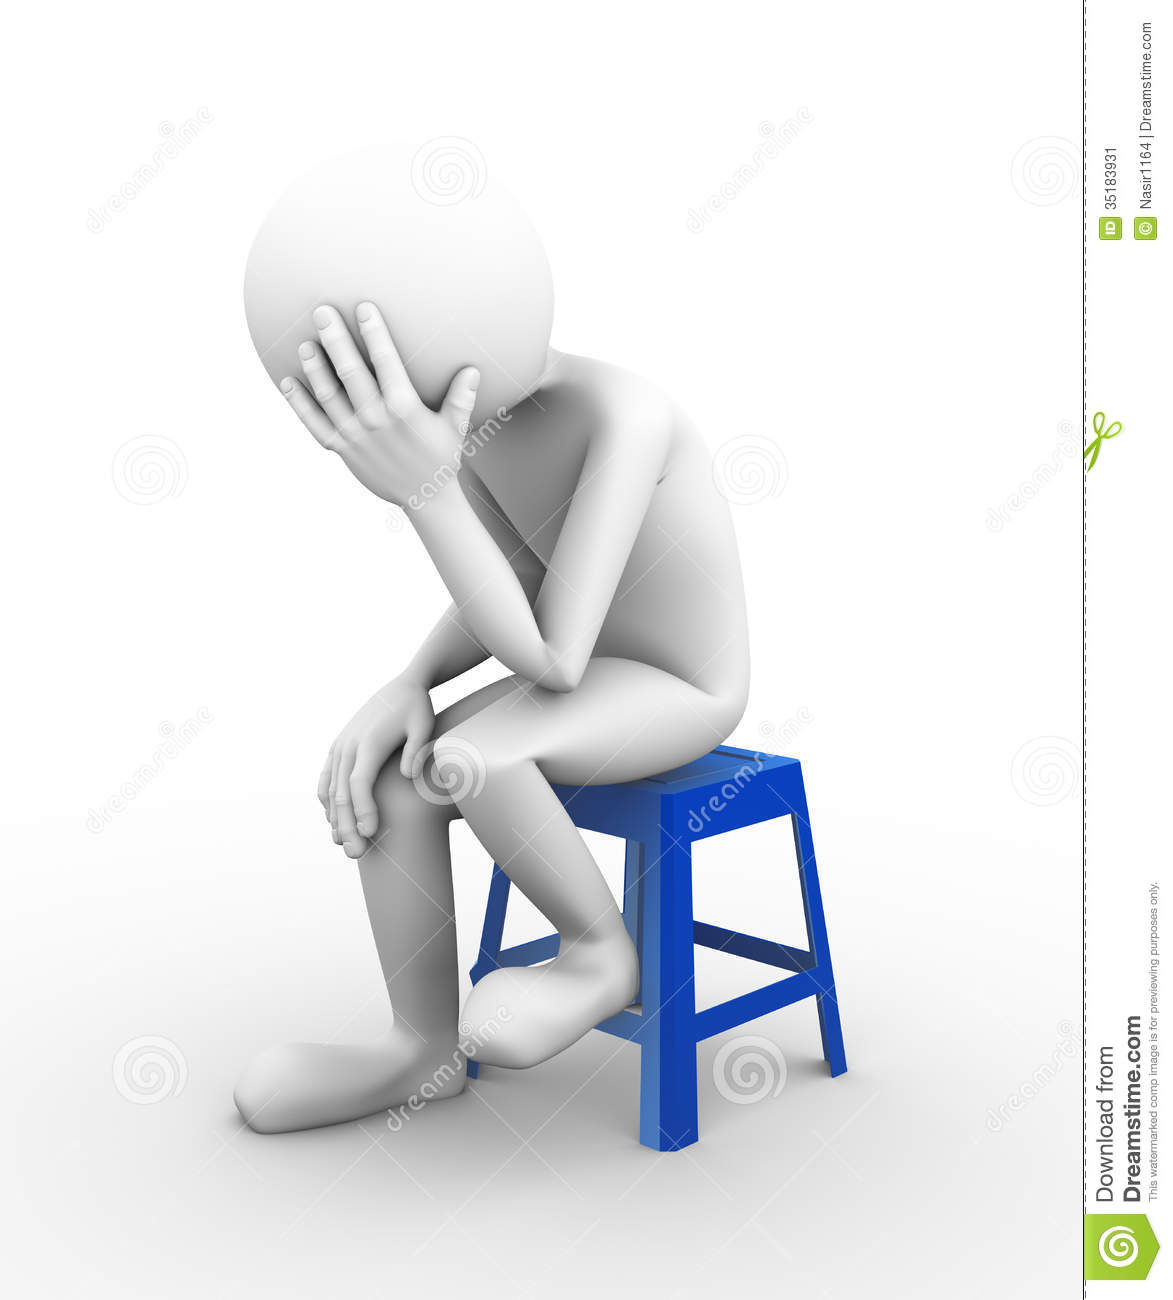 3d Rendering Of Frustrated Sad Depressed Man Sitting On Plastic Stool